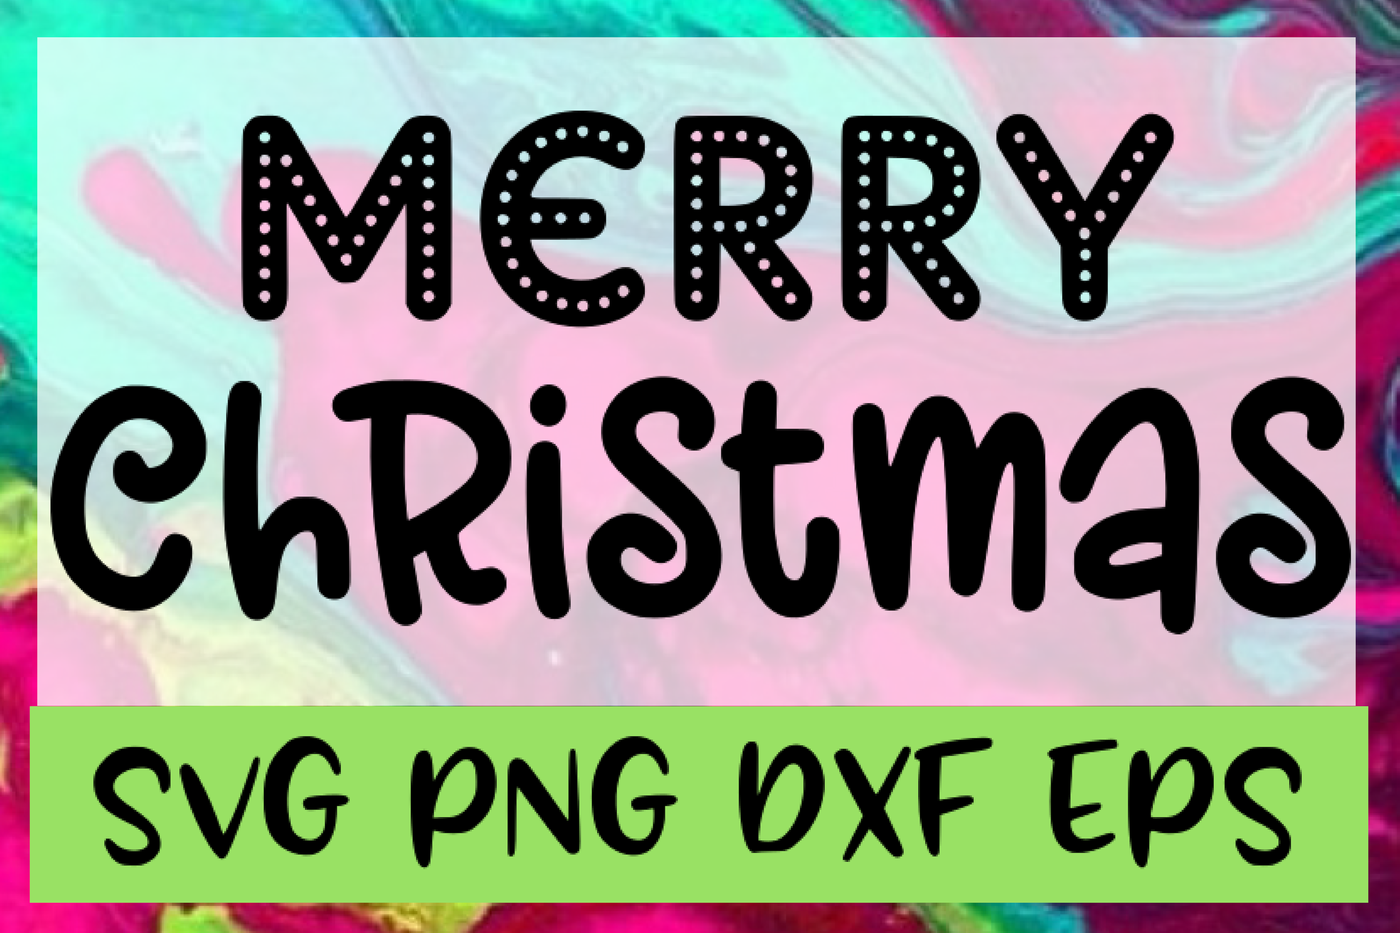 Merry Christmas Svg Png Dxf Eps Design Files By Emsdigitems Thehungryjpeg Com